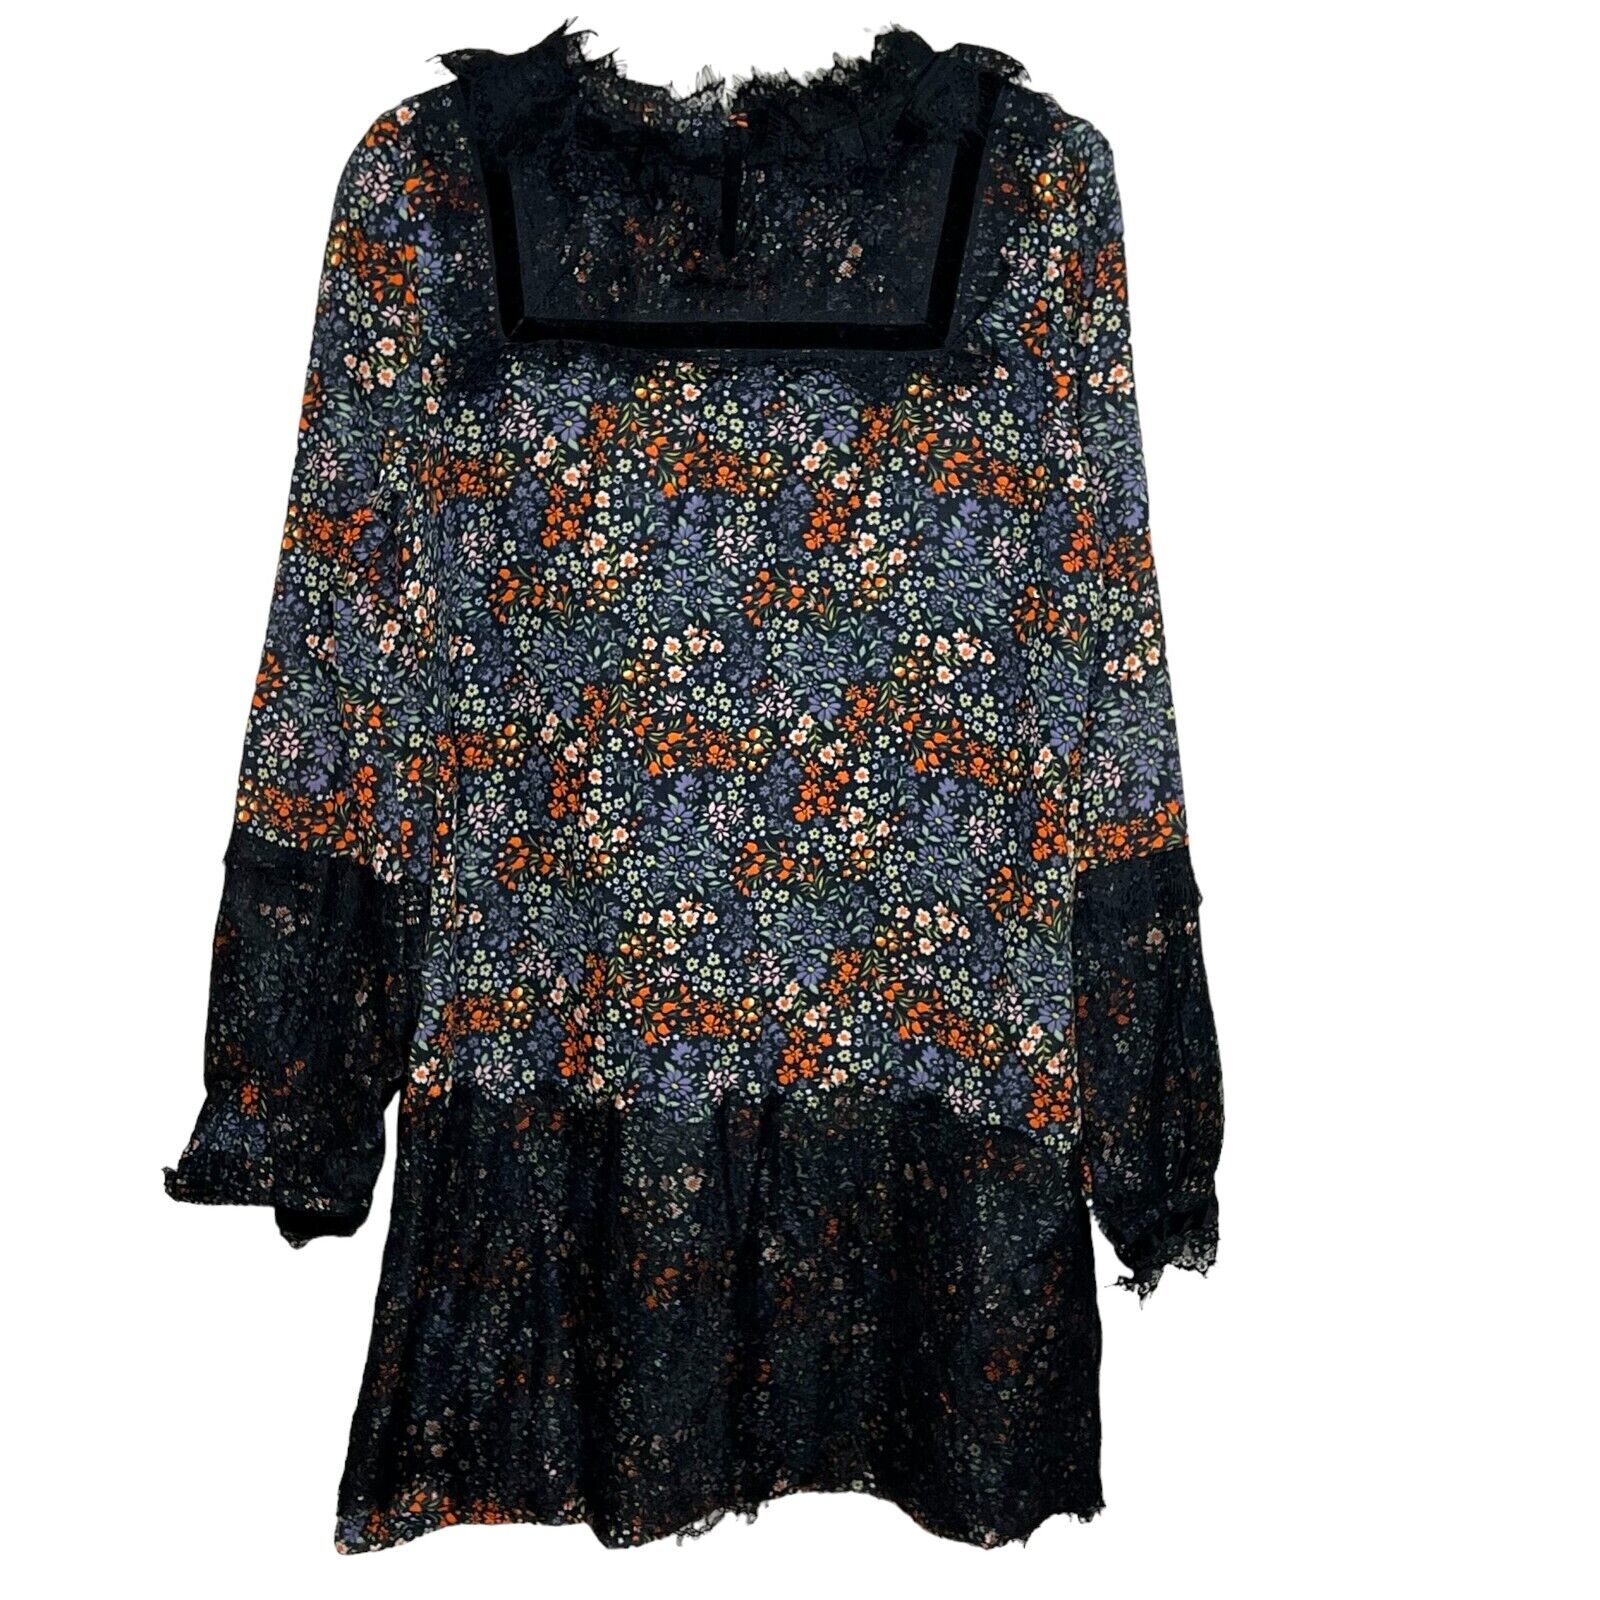 Warm NY Black Lace Floral Long Sleeve Shift Mini Dress Size 6-8 (2)